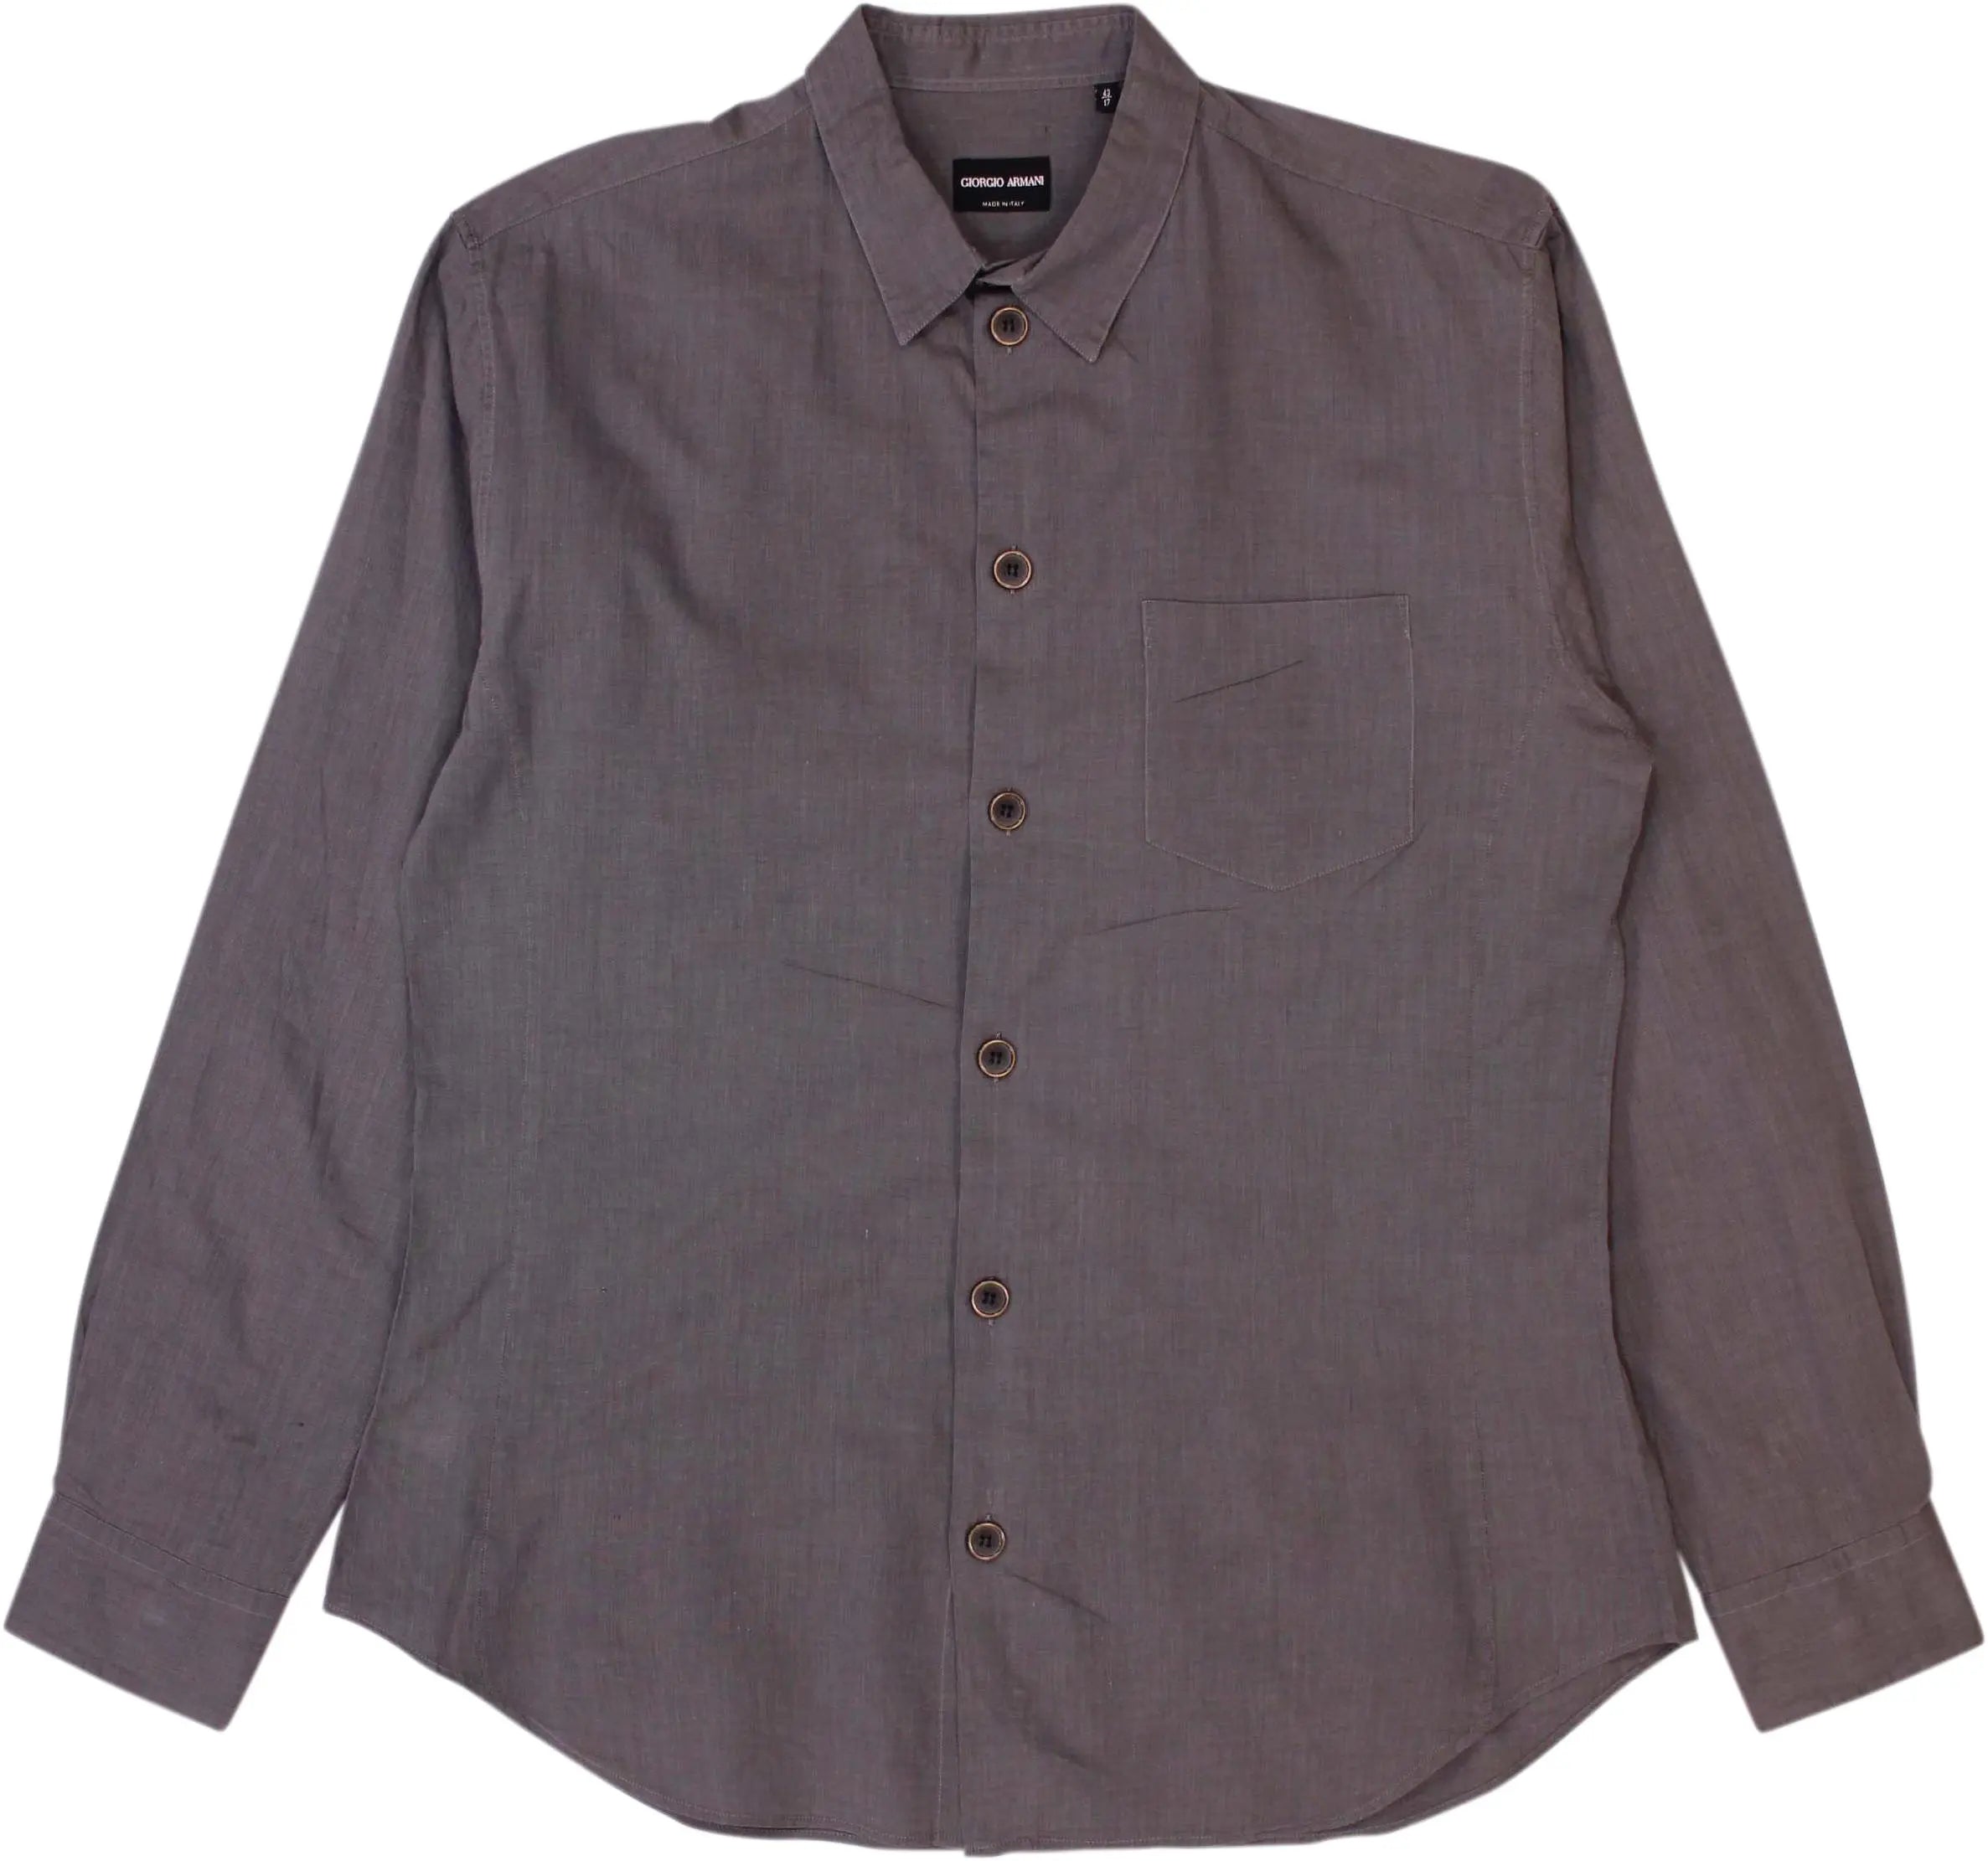 Giorgio Armani - Grey Long Sleeve Shirt by Giorgio Armani- ThriftTale.com - Vintage and second handclothing